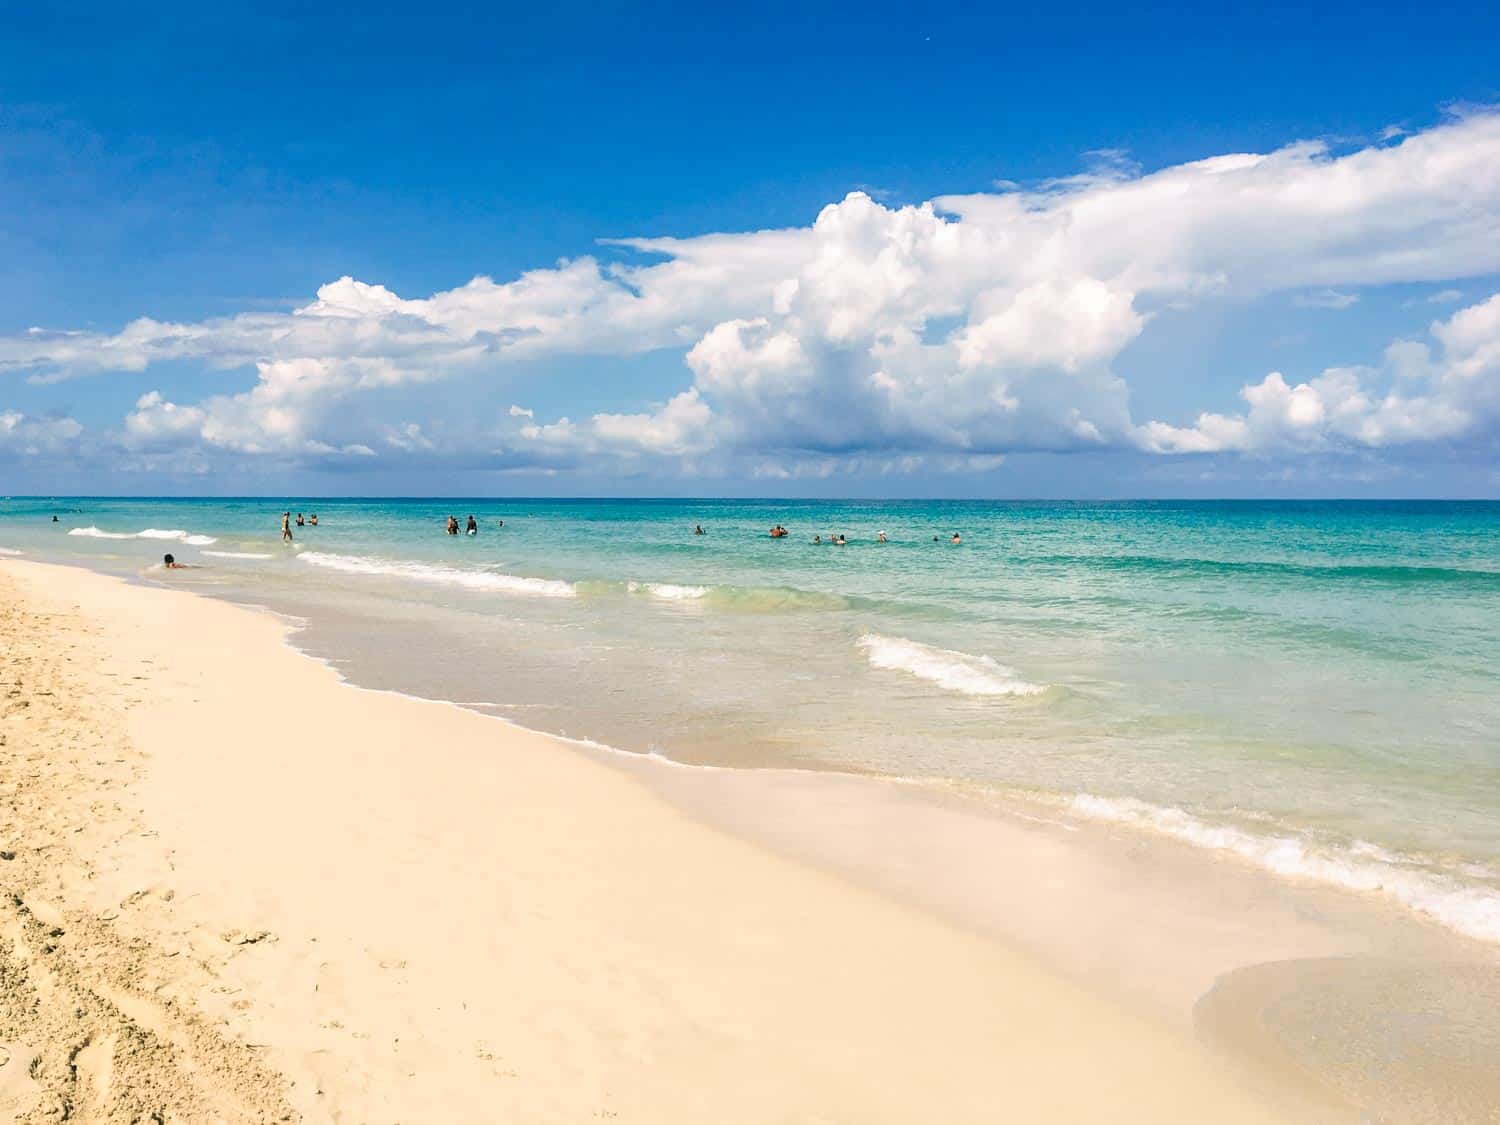 Cayo Jutia beach in Cuba, one of the best beaches in the Caribbean